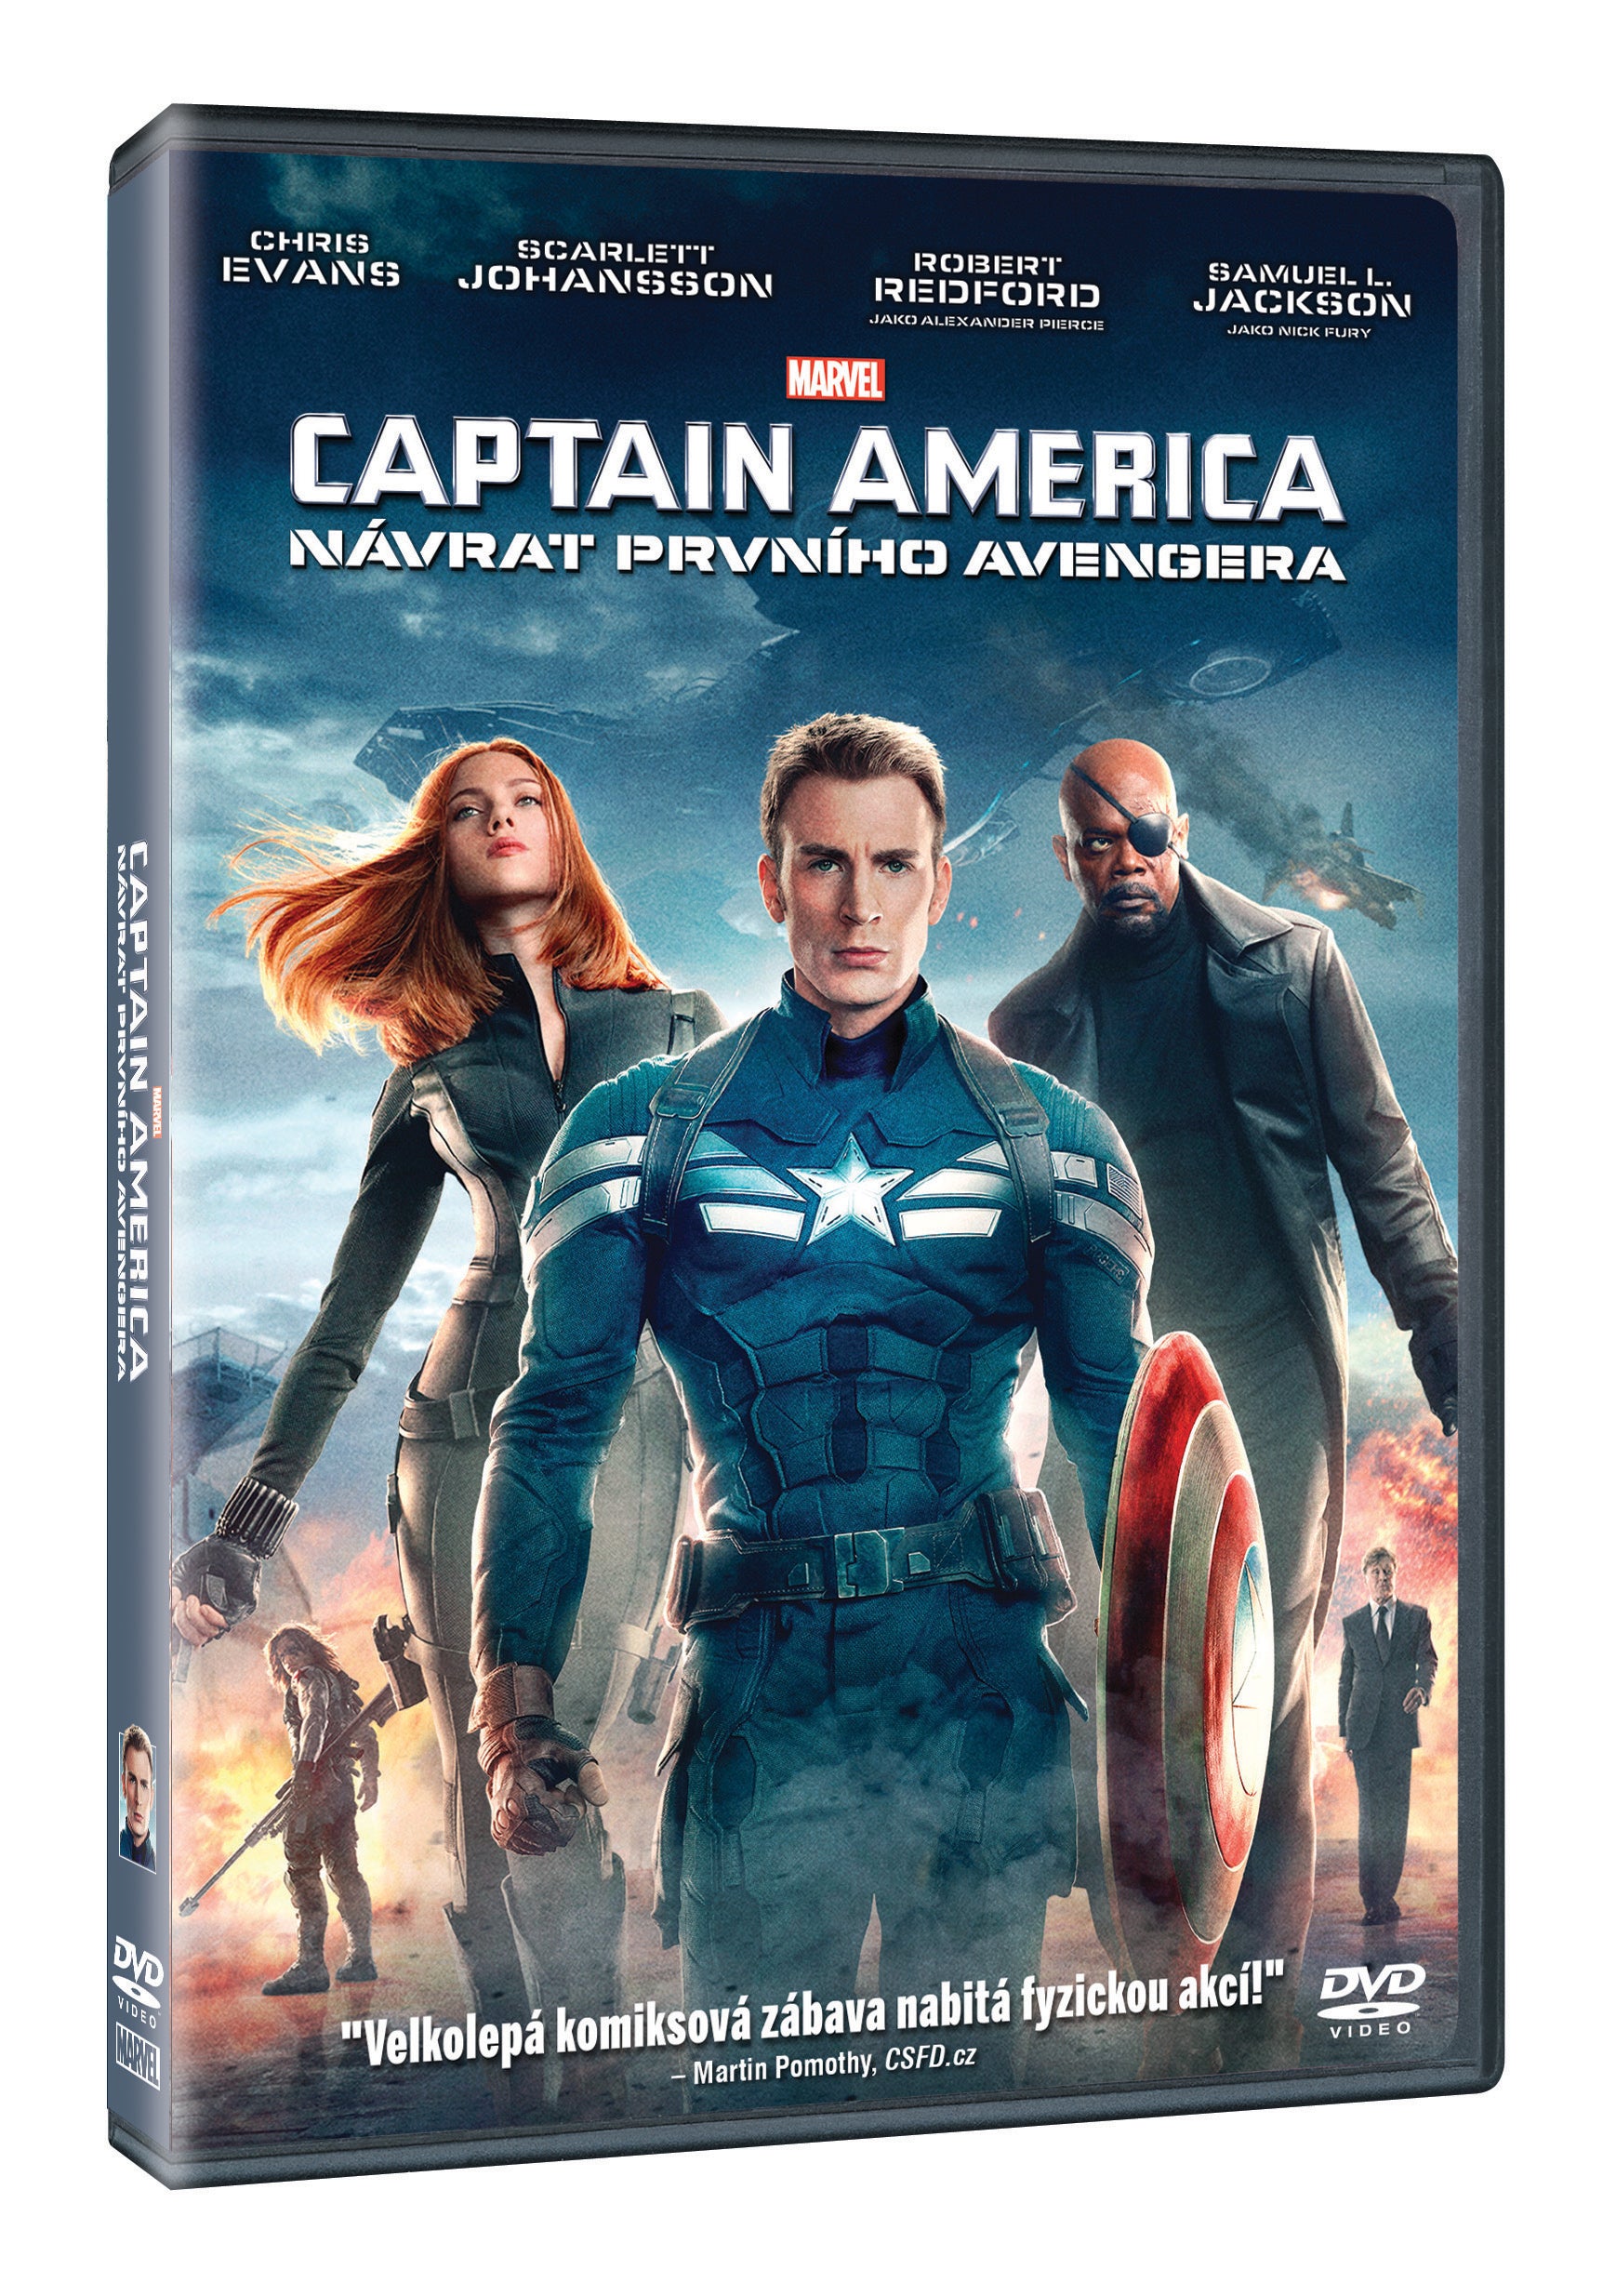 Captain America: Navrat prvniho Avengera DVD / Captain America: The Winter Soldier